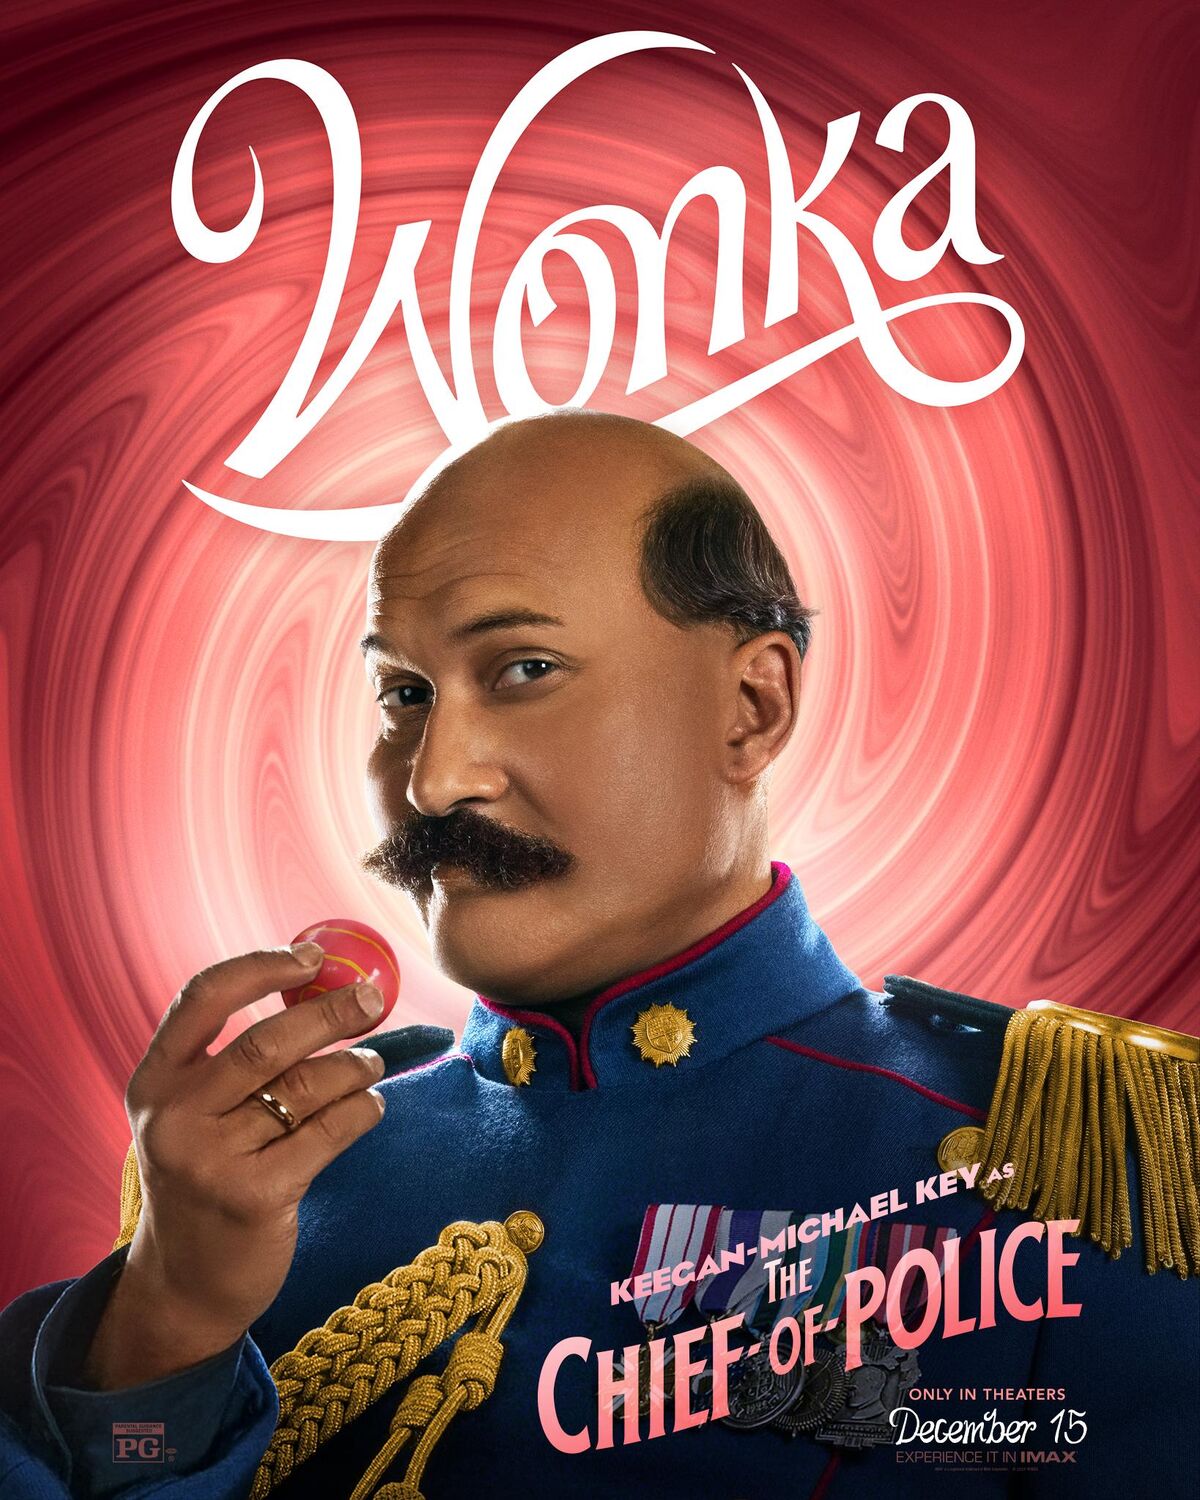 Black Willy Wonka, Villains Wiki